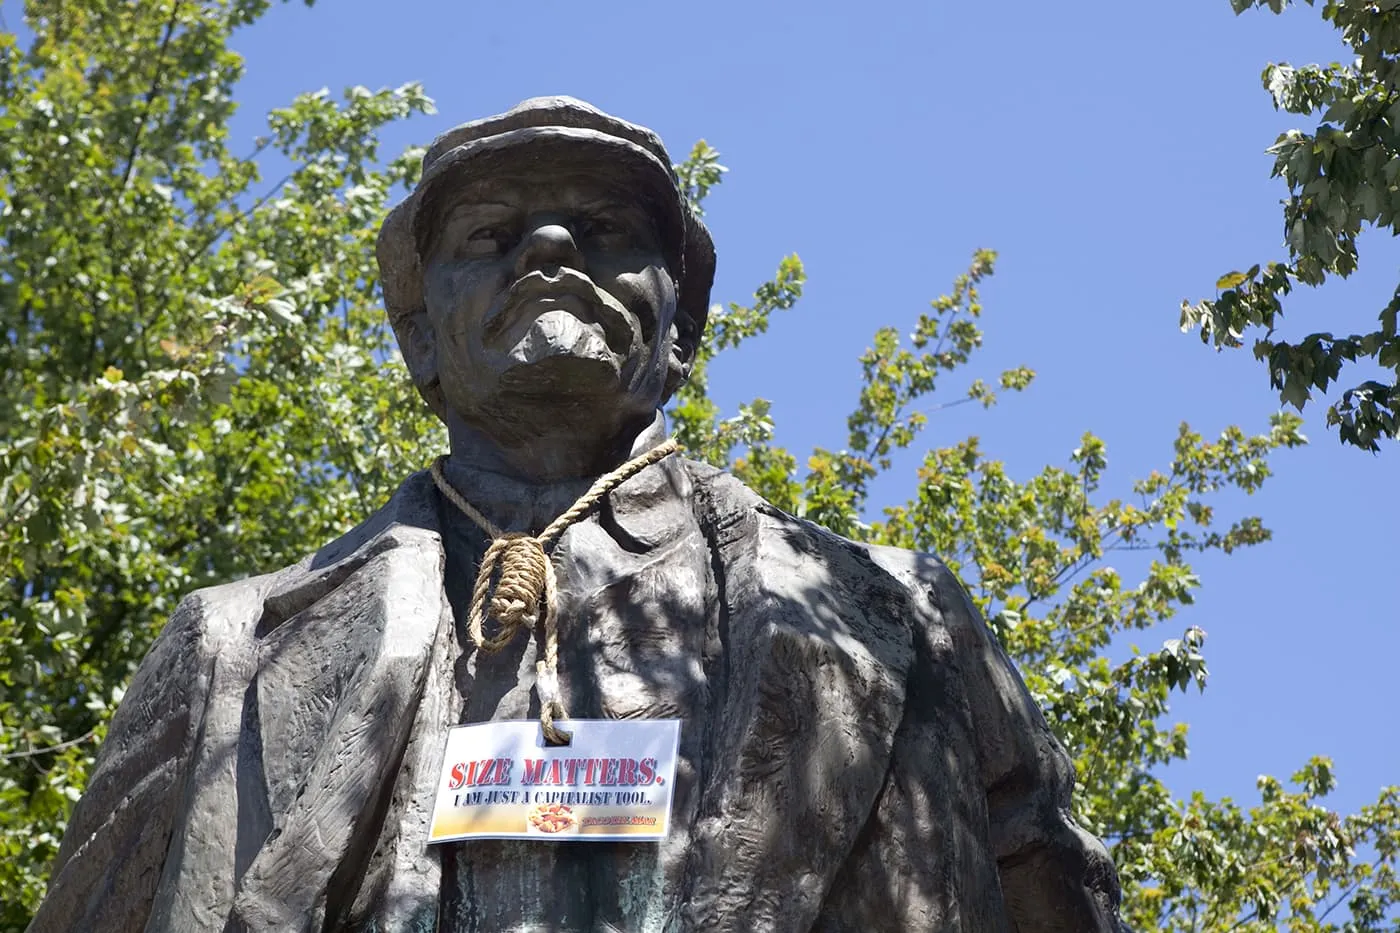 Giant statue of Vladimir Lenin, a roadside attraction in Fremont, Seattle, Washington.